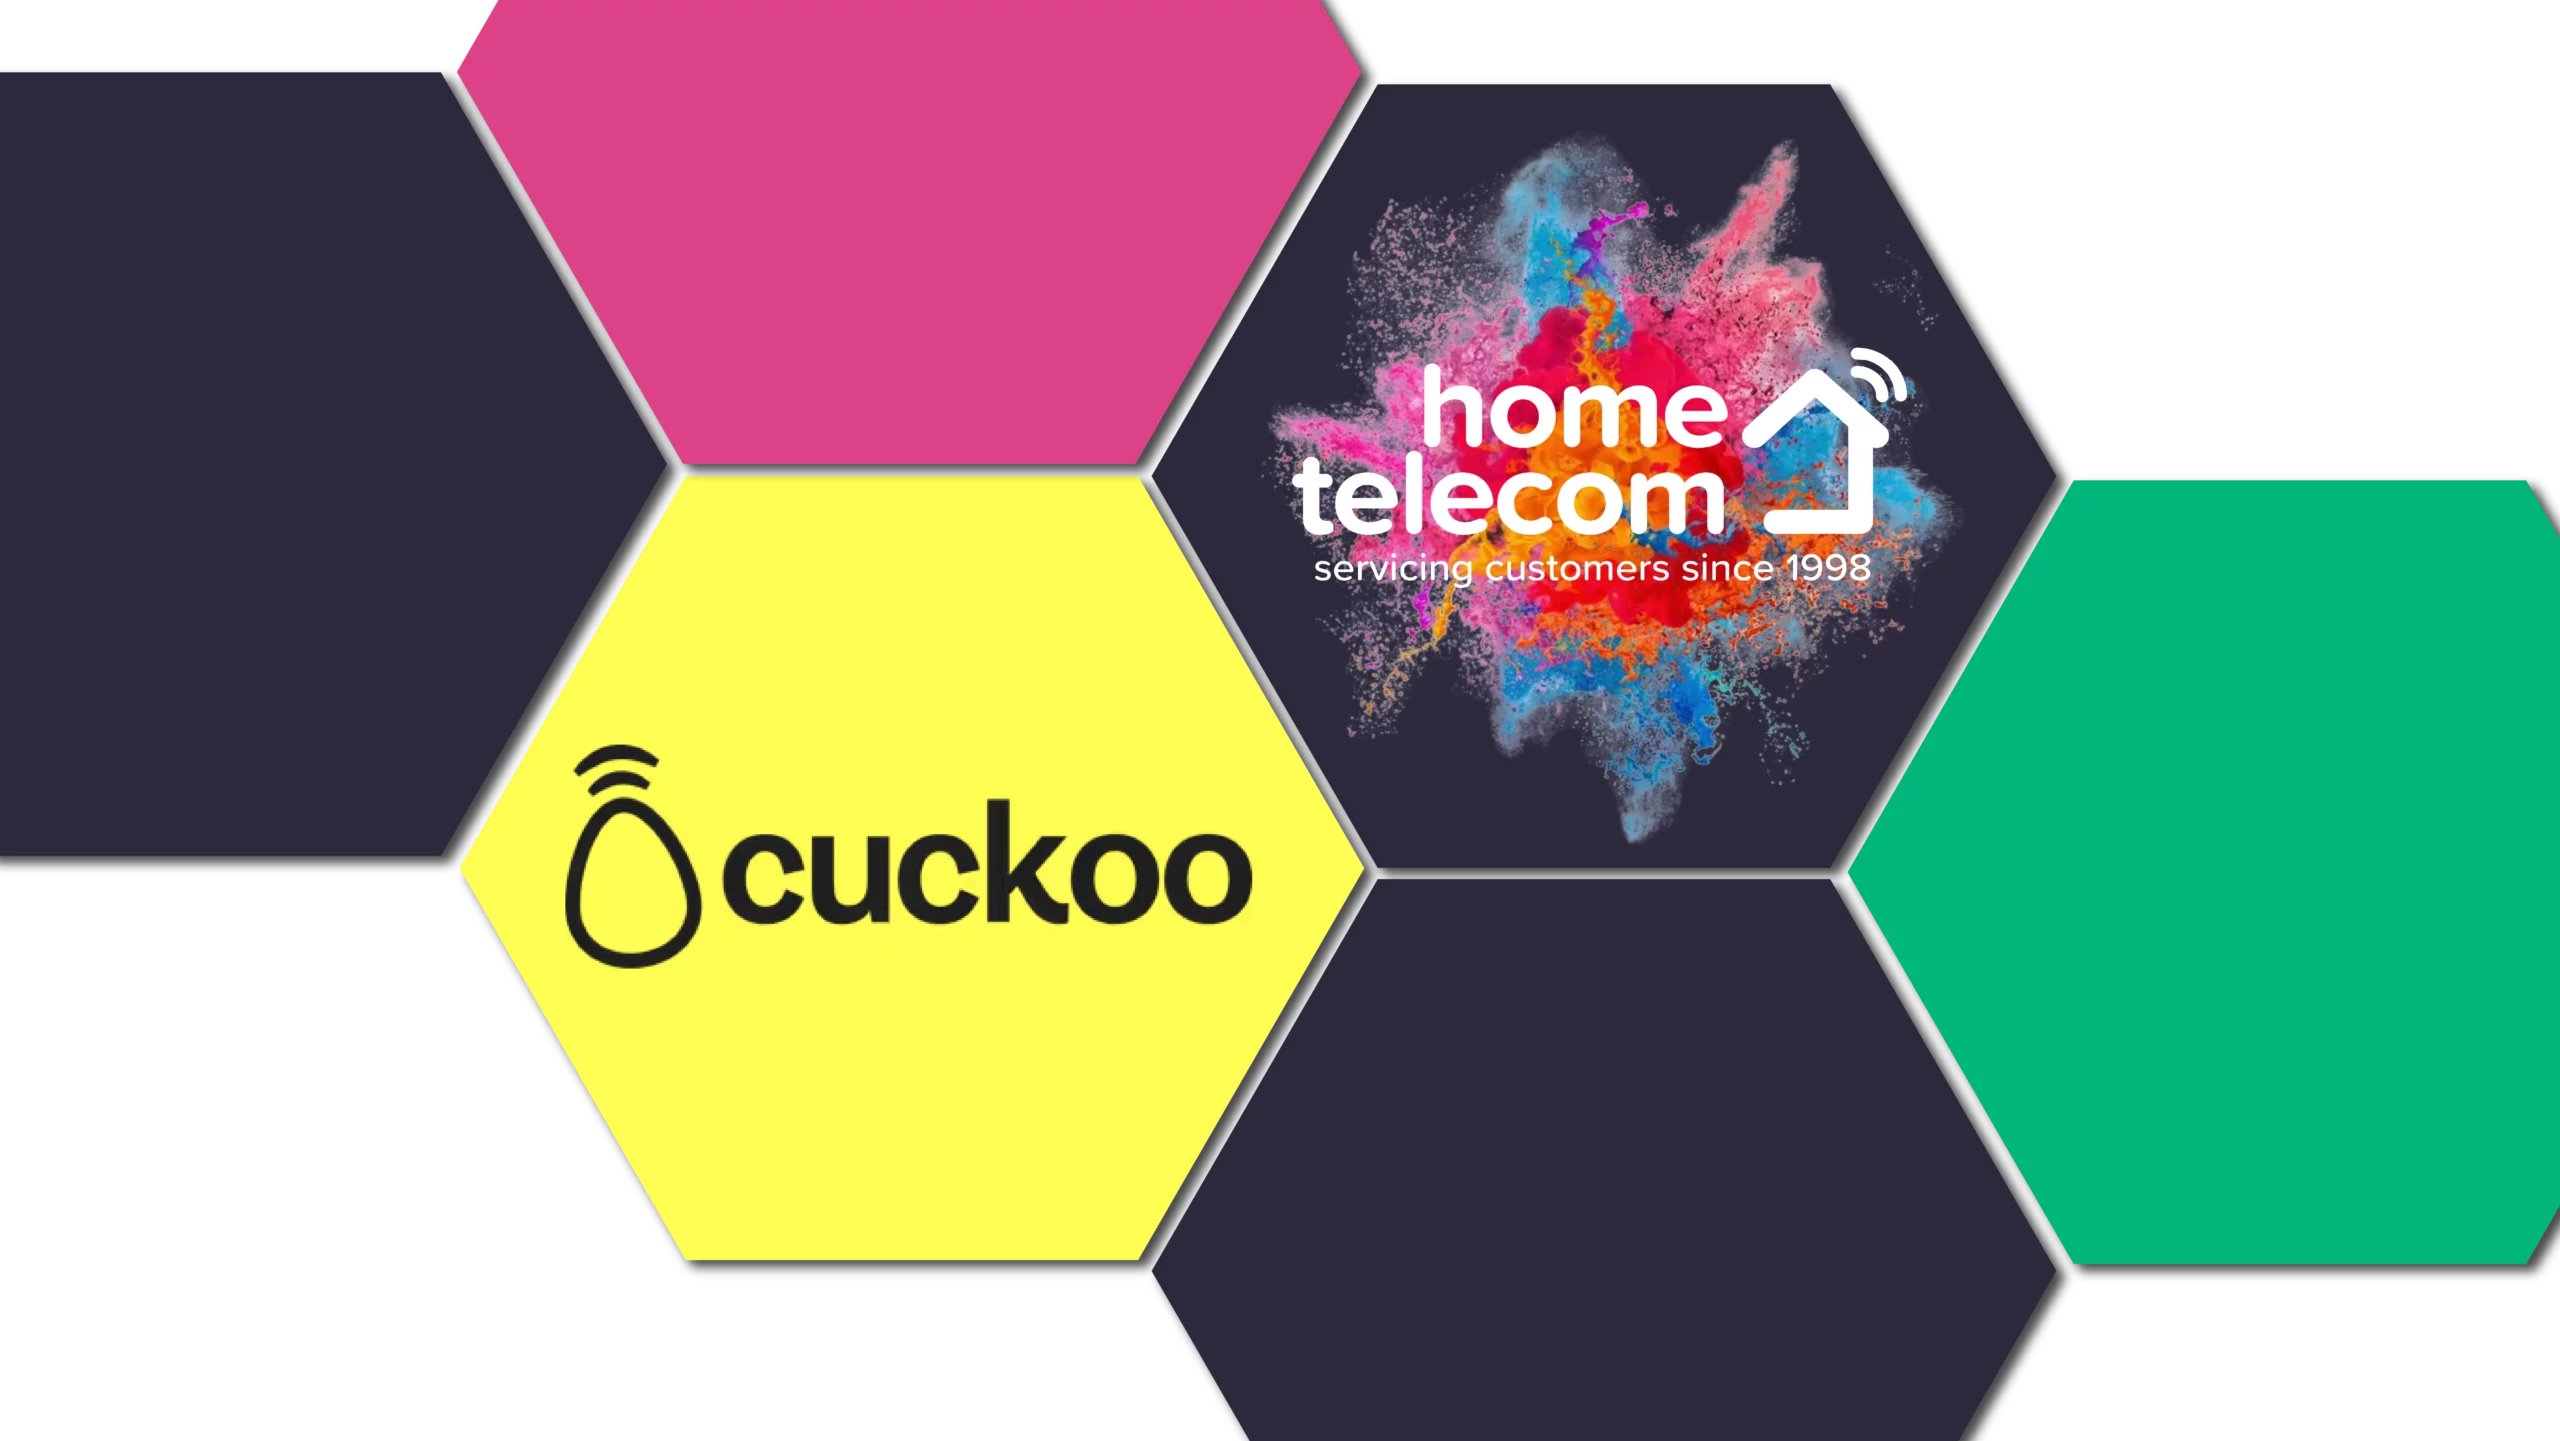 Home Telecom and Cuckoo logo